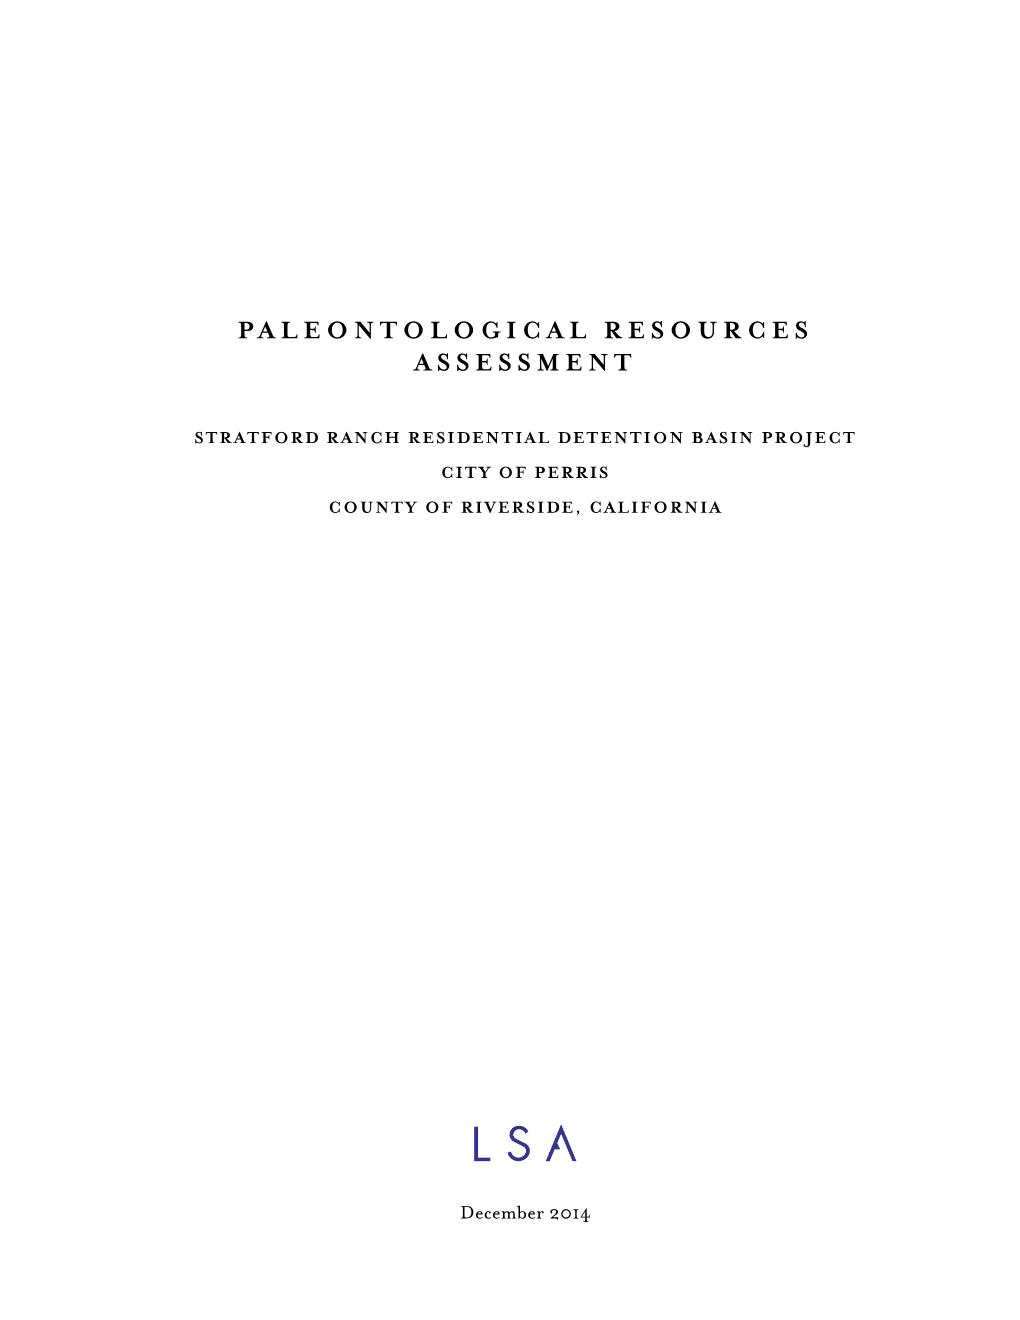 Paleontological Resources Assessment